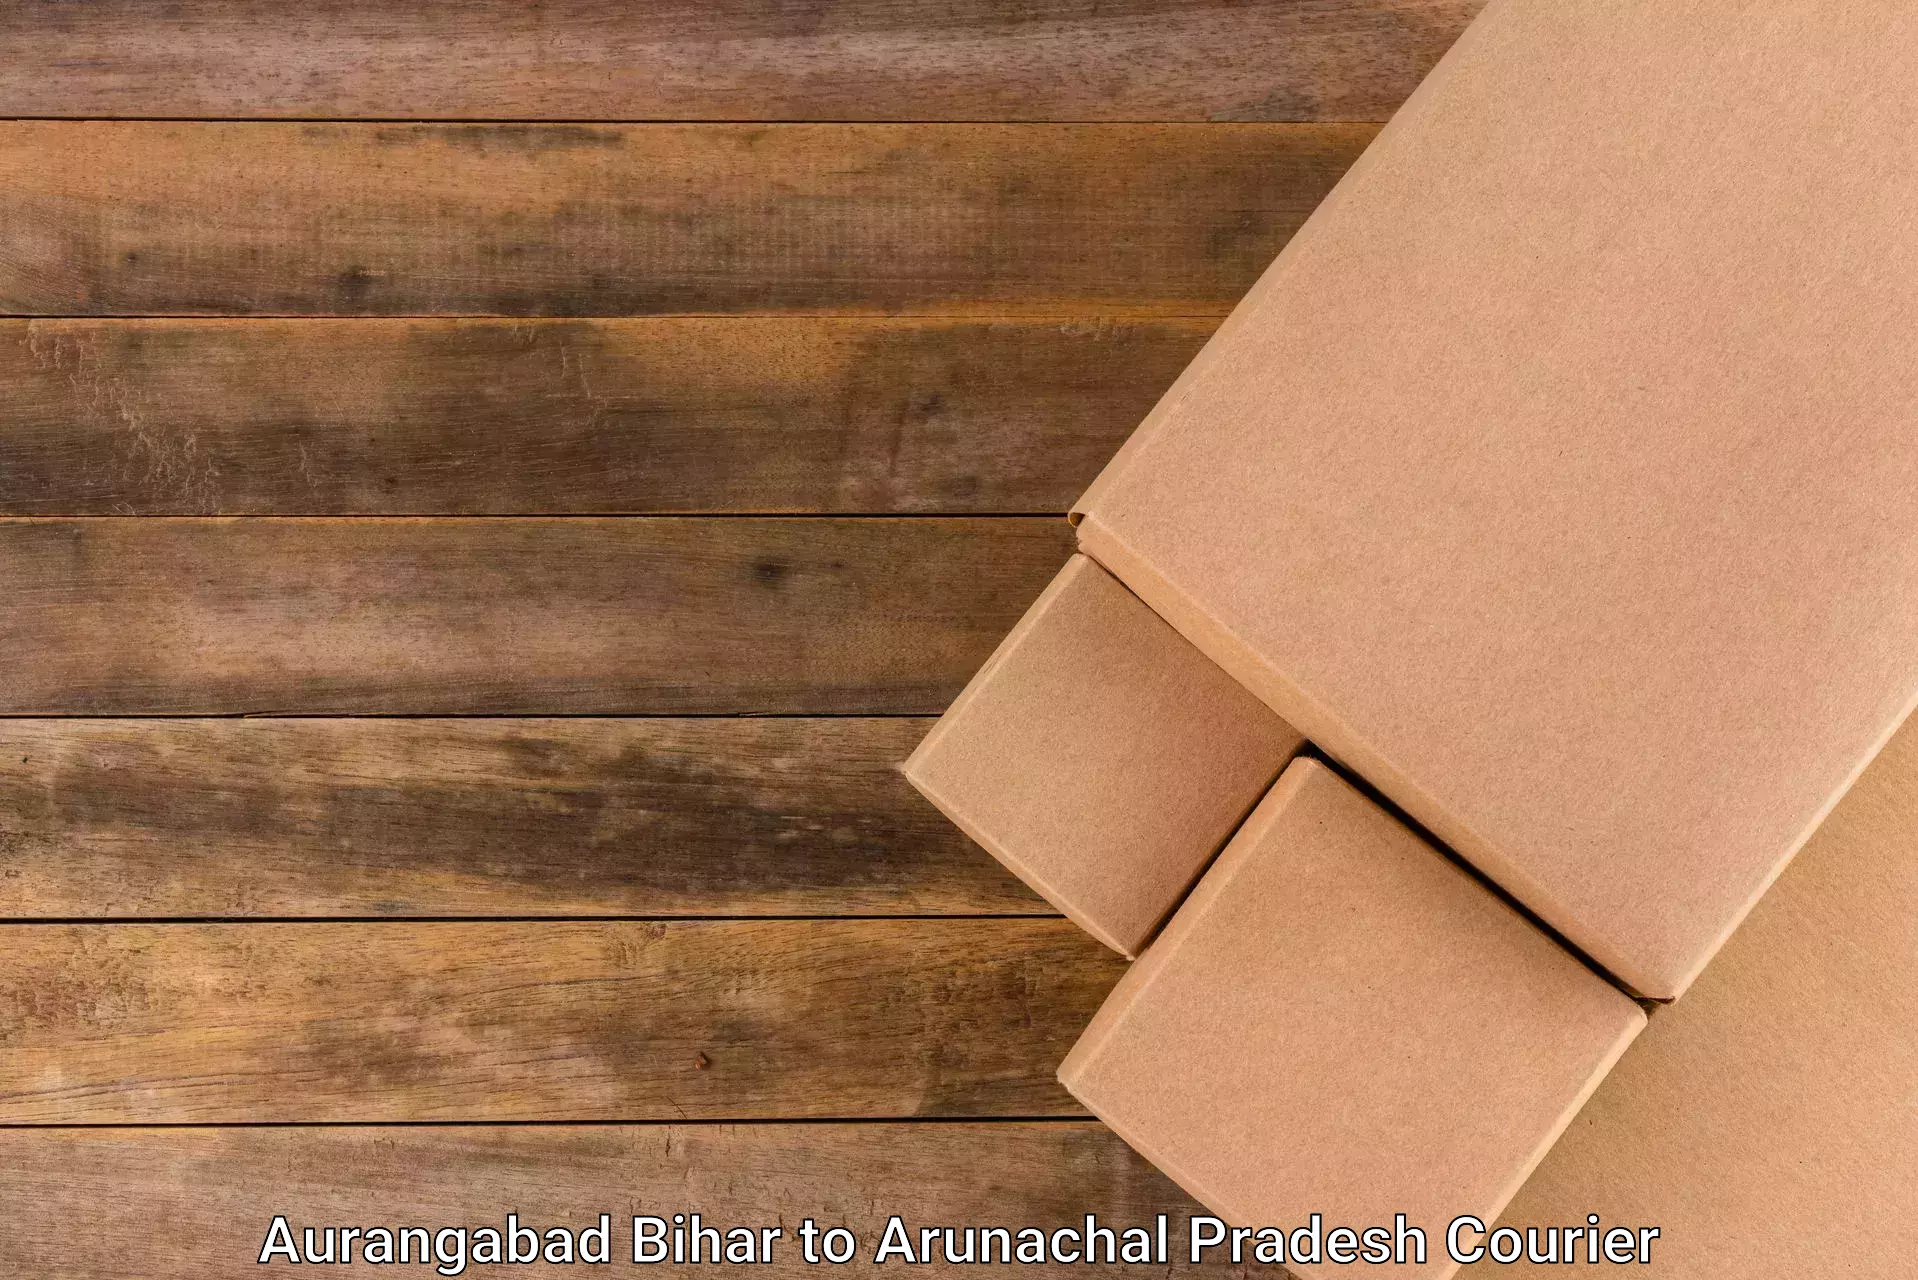 Package delivery network Aurangabad Bihar to Bhalukpong